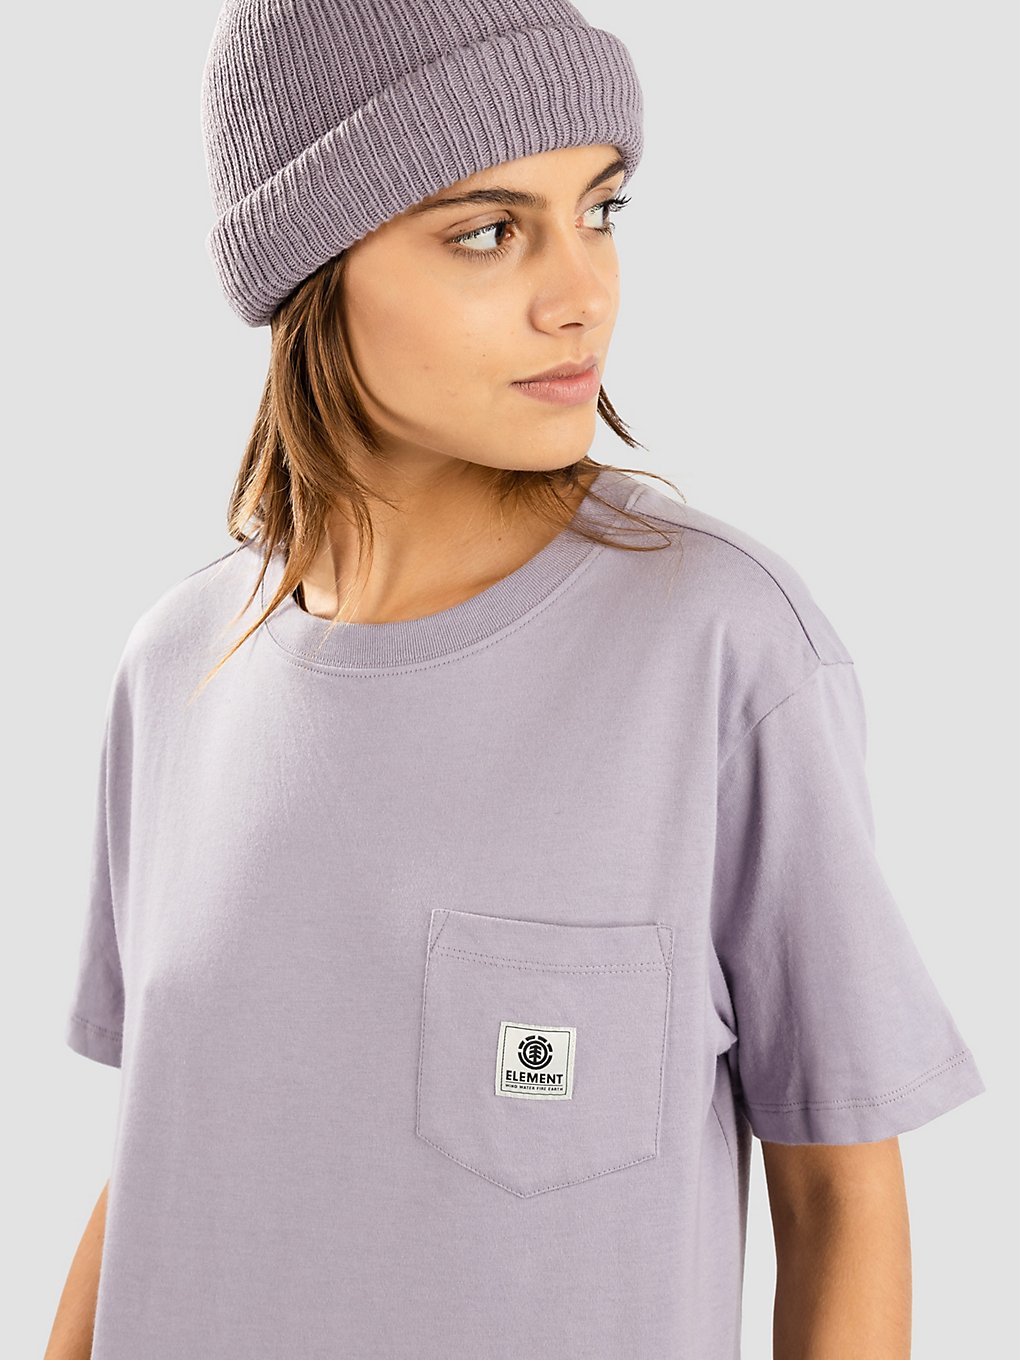 Element Basic Pocket Label T-Shirt lavender gray kaufen